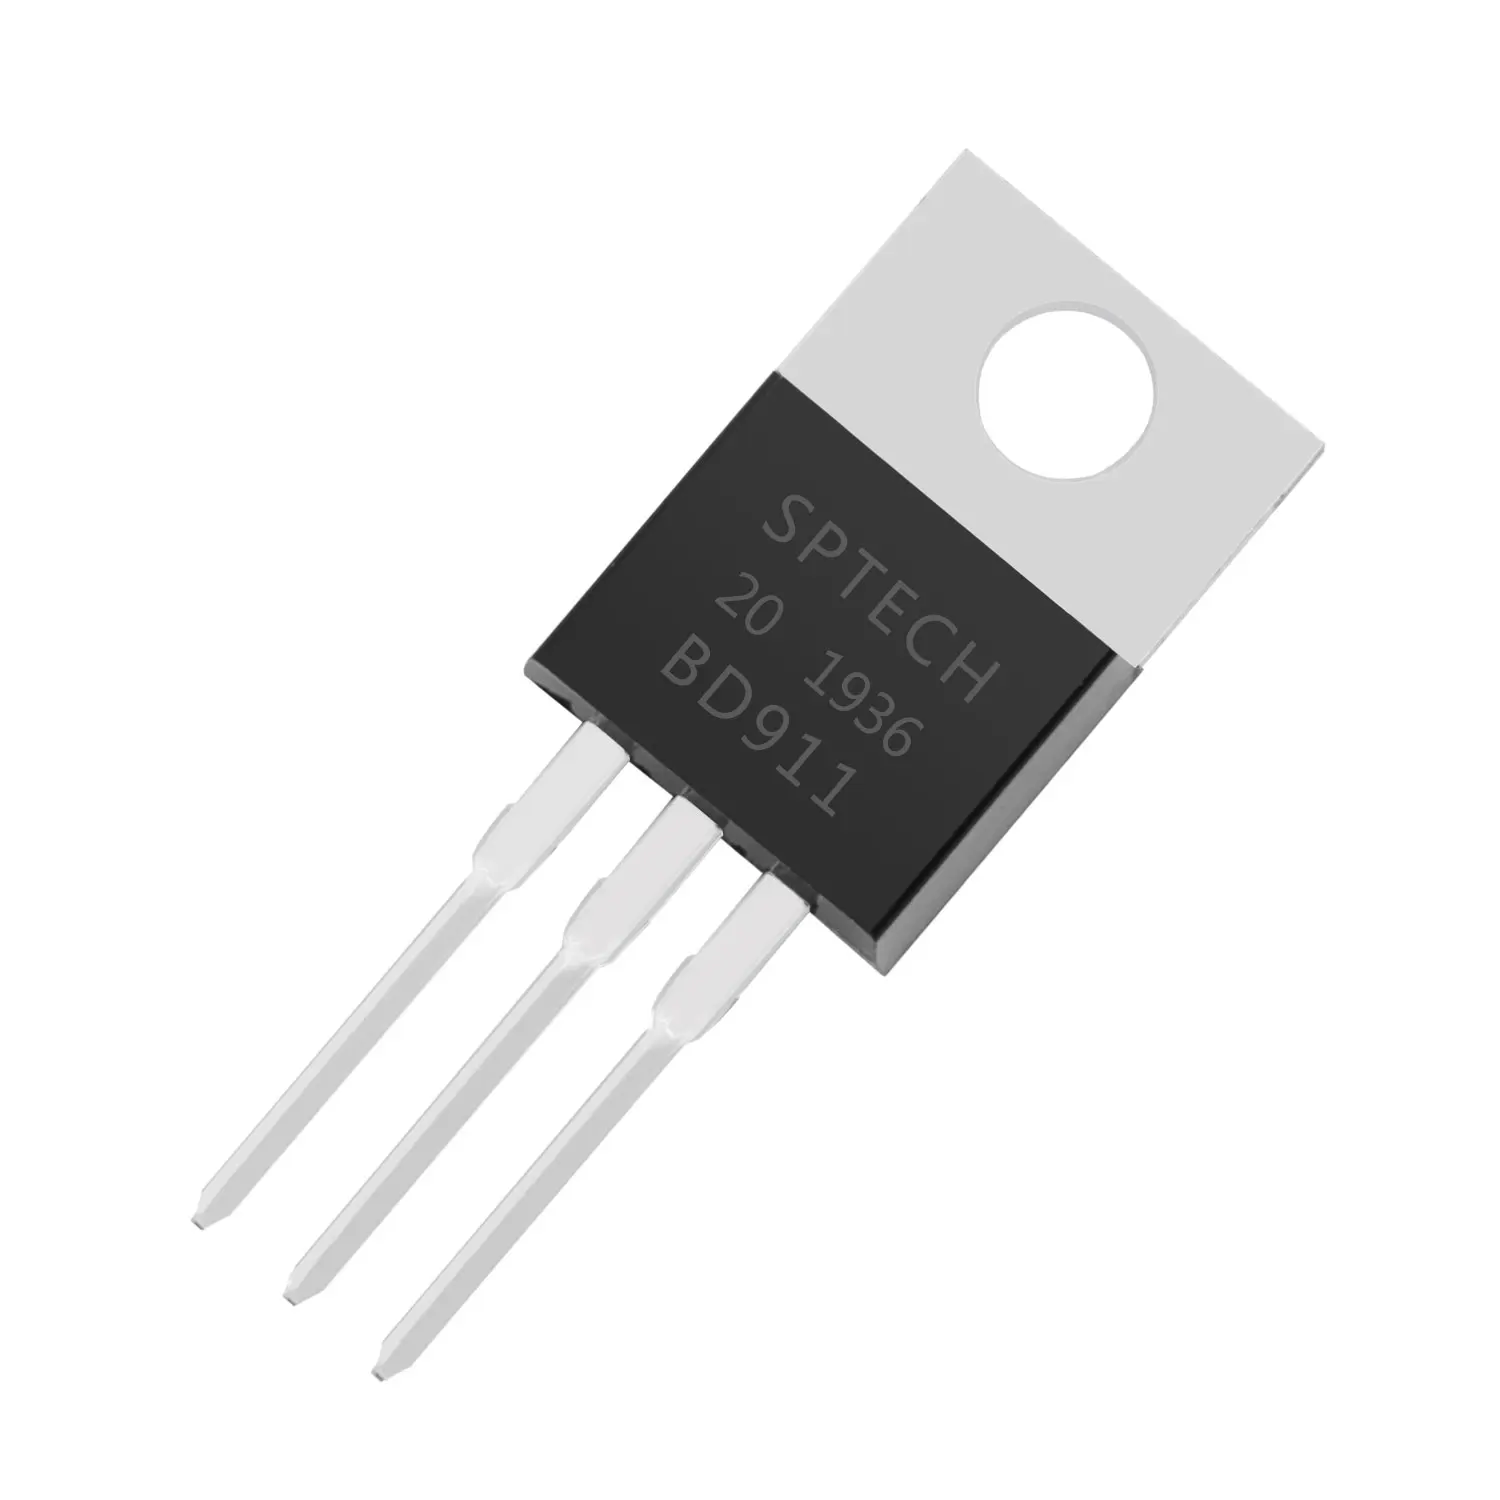 PHILIPS BUK453-60B TO-220 Power MOSFIT Transistor New Lot Quantity-5 